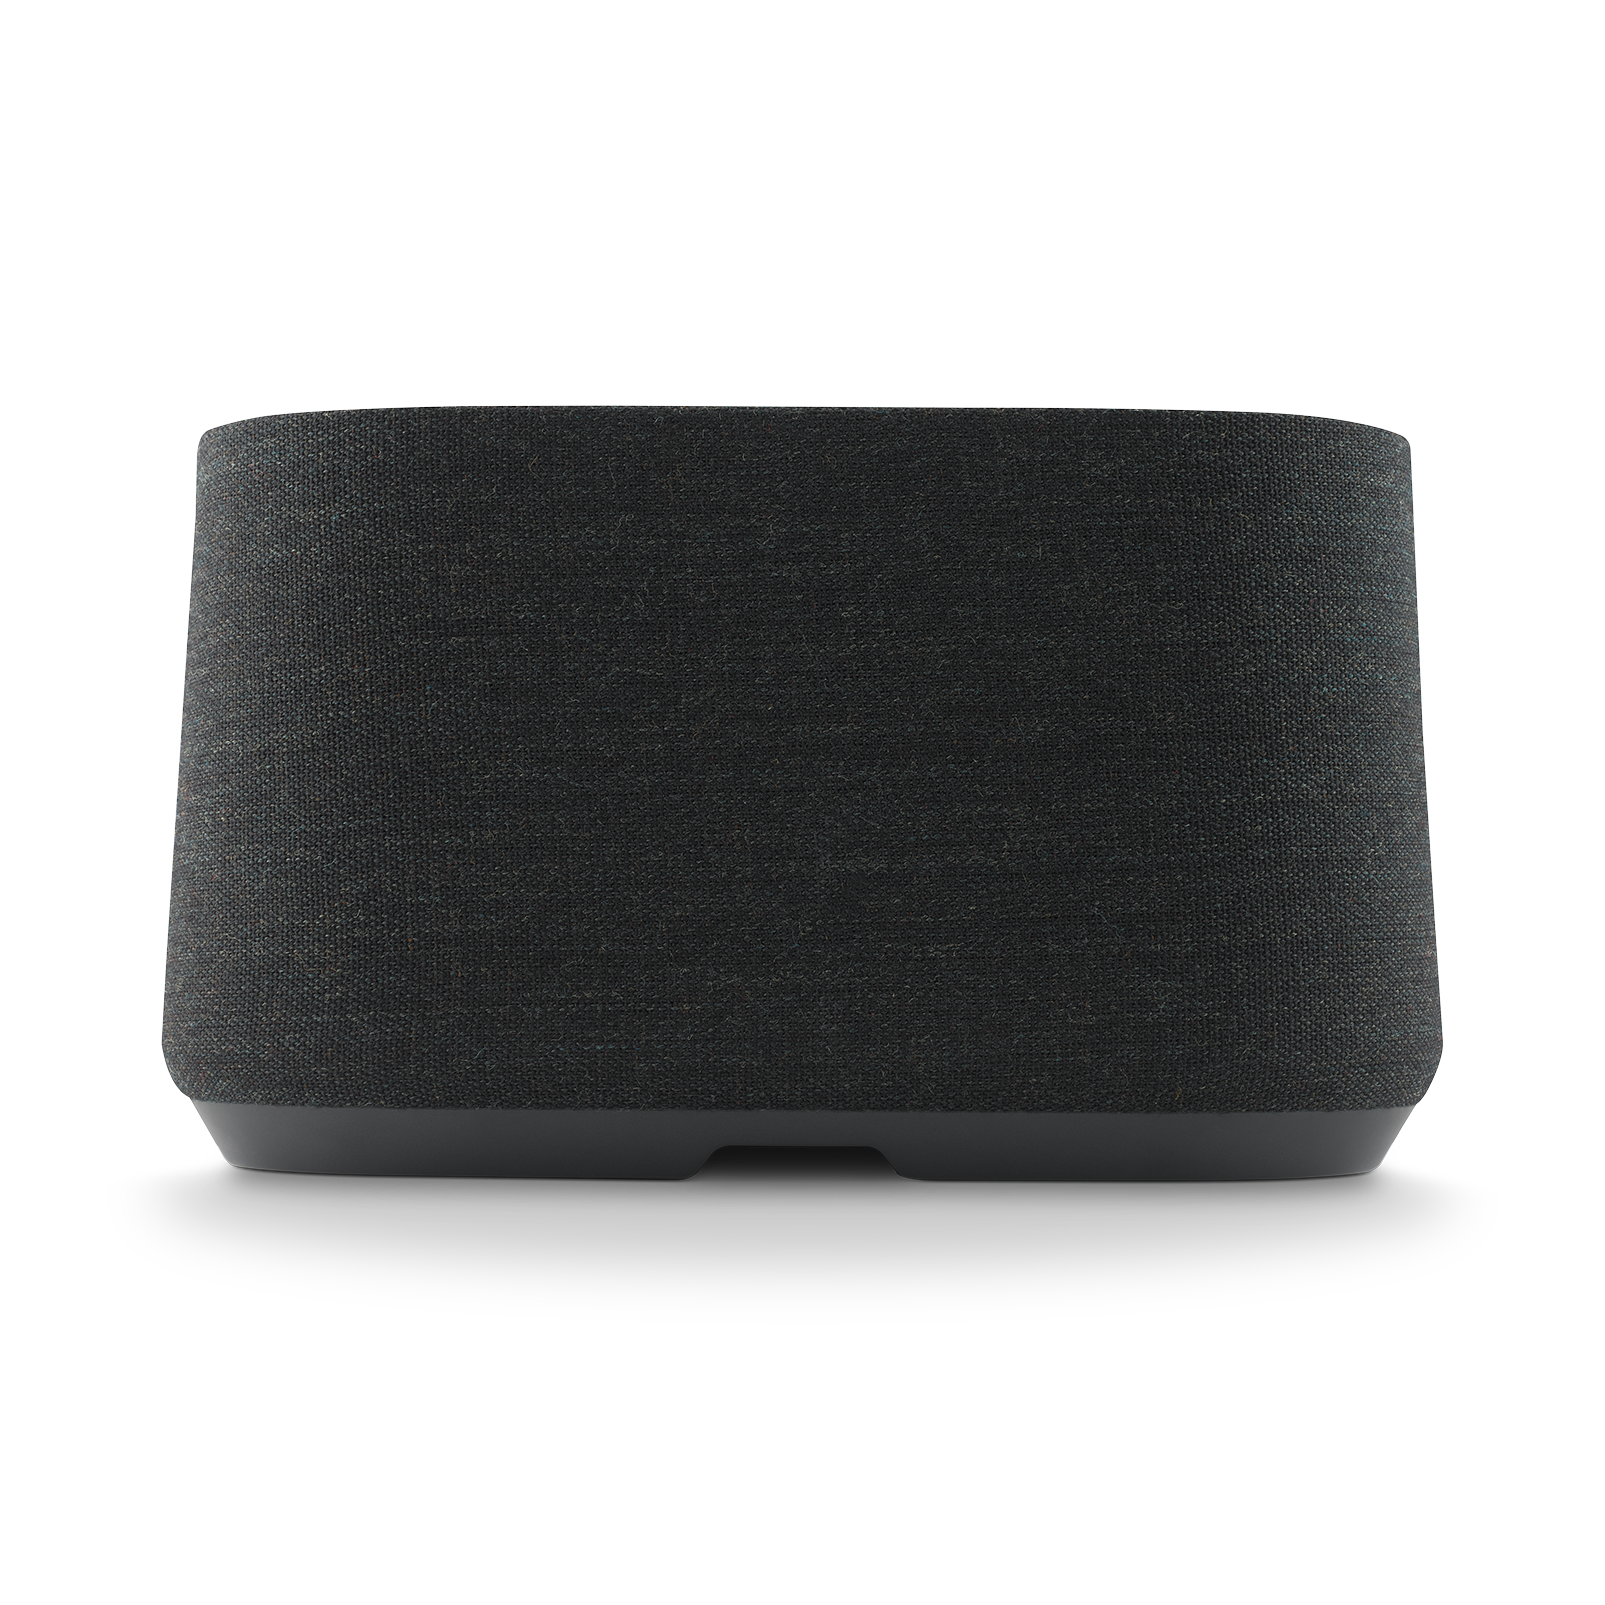 Harman Kardon Citation 300 - Black - The medium-size smart home speaker with award winning design - Back